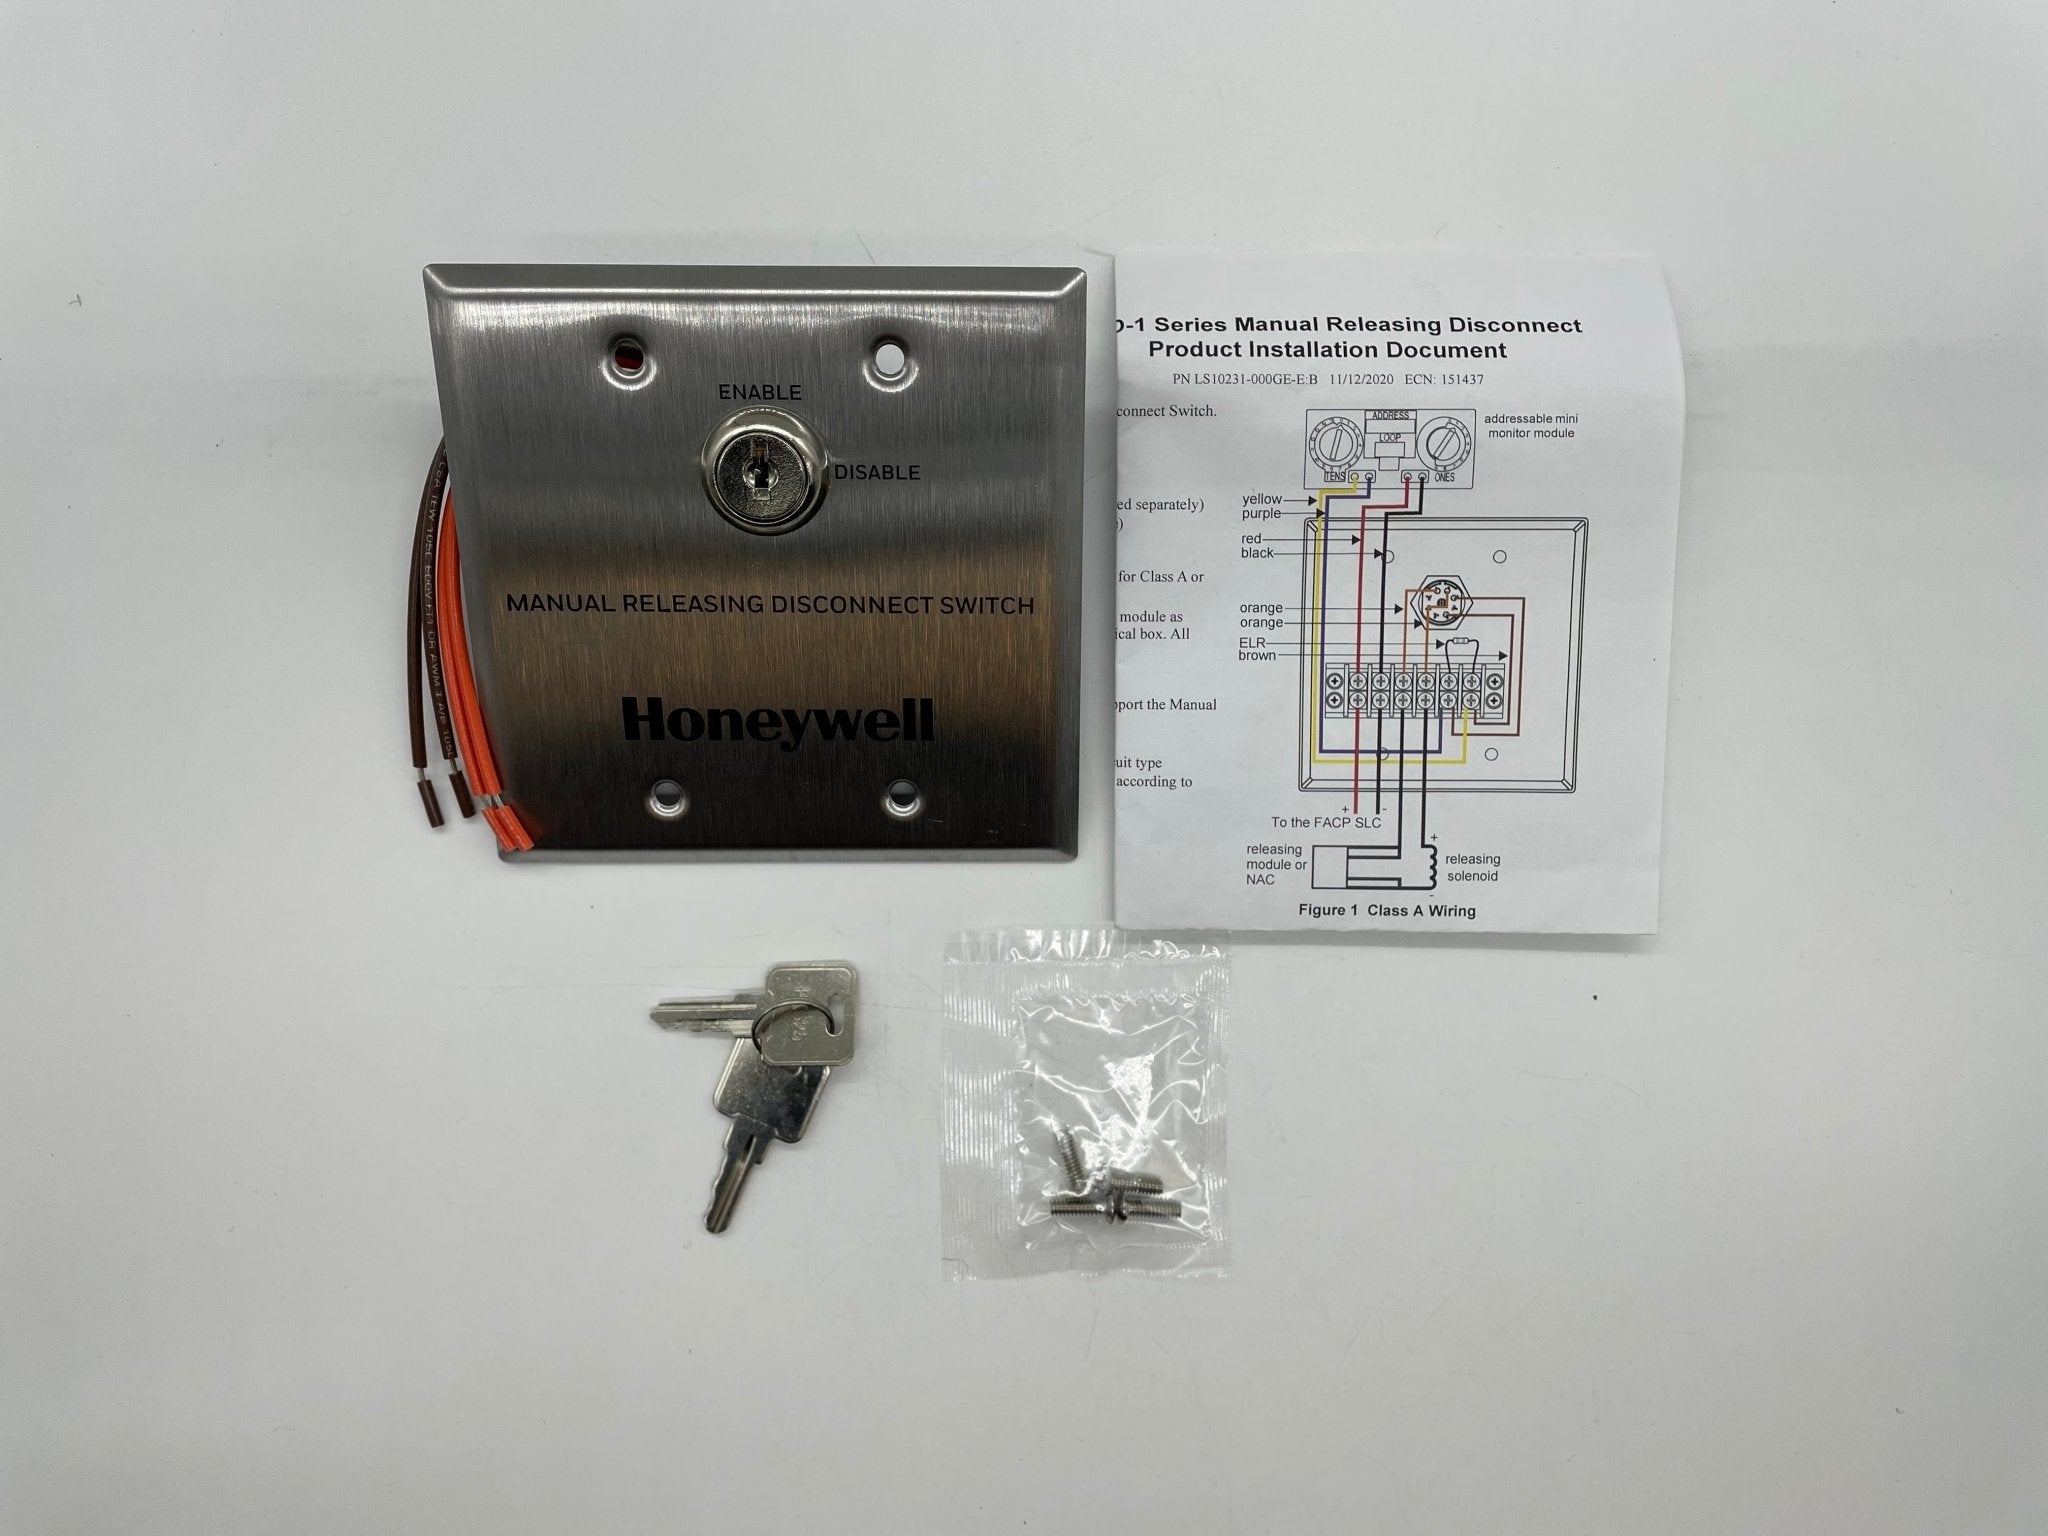 Honeywell MRD-1H - The Fire Alarm Supplier